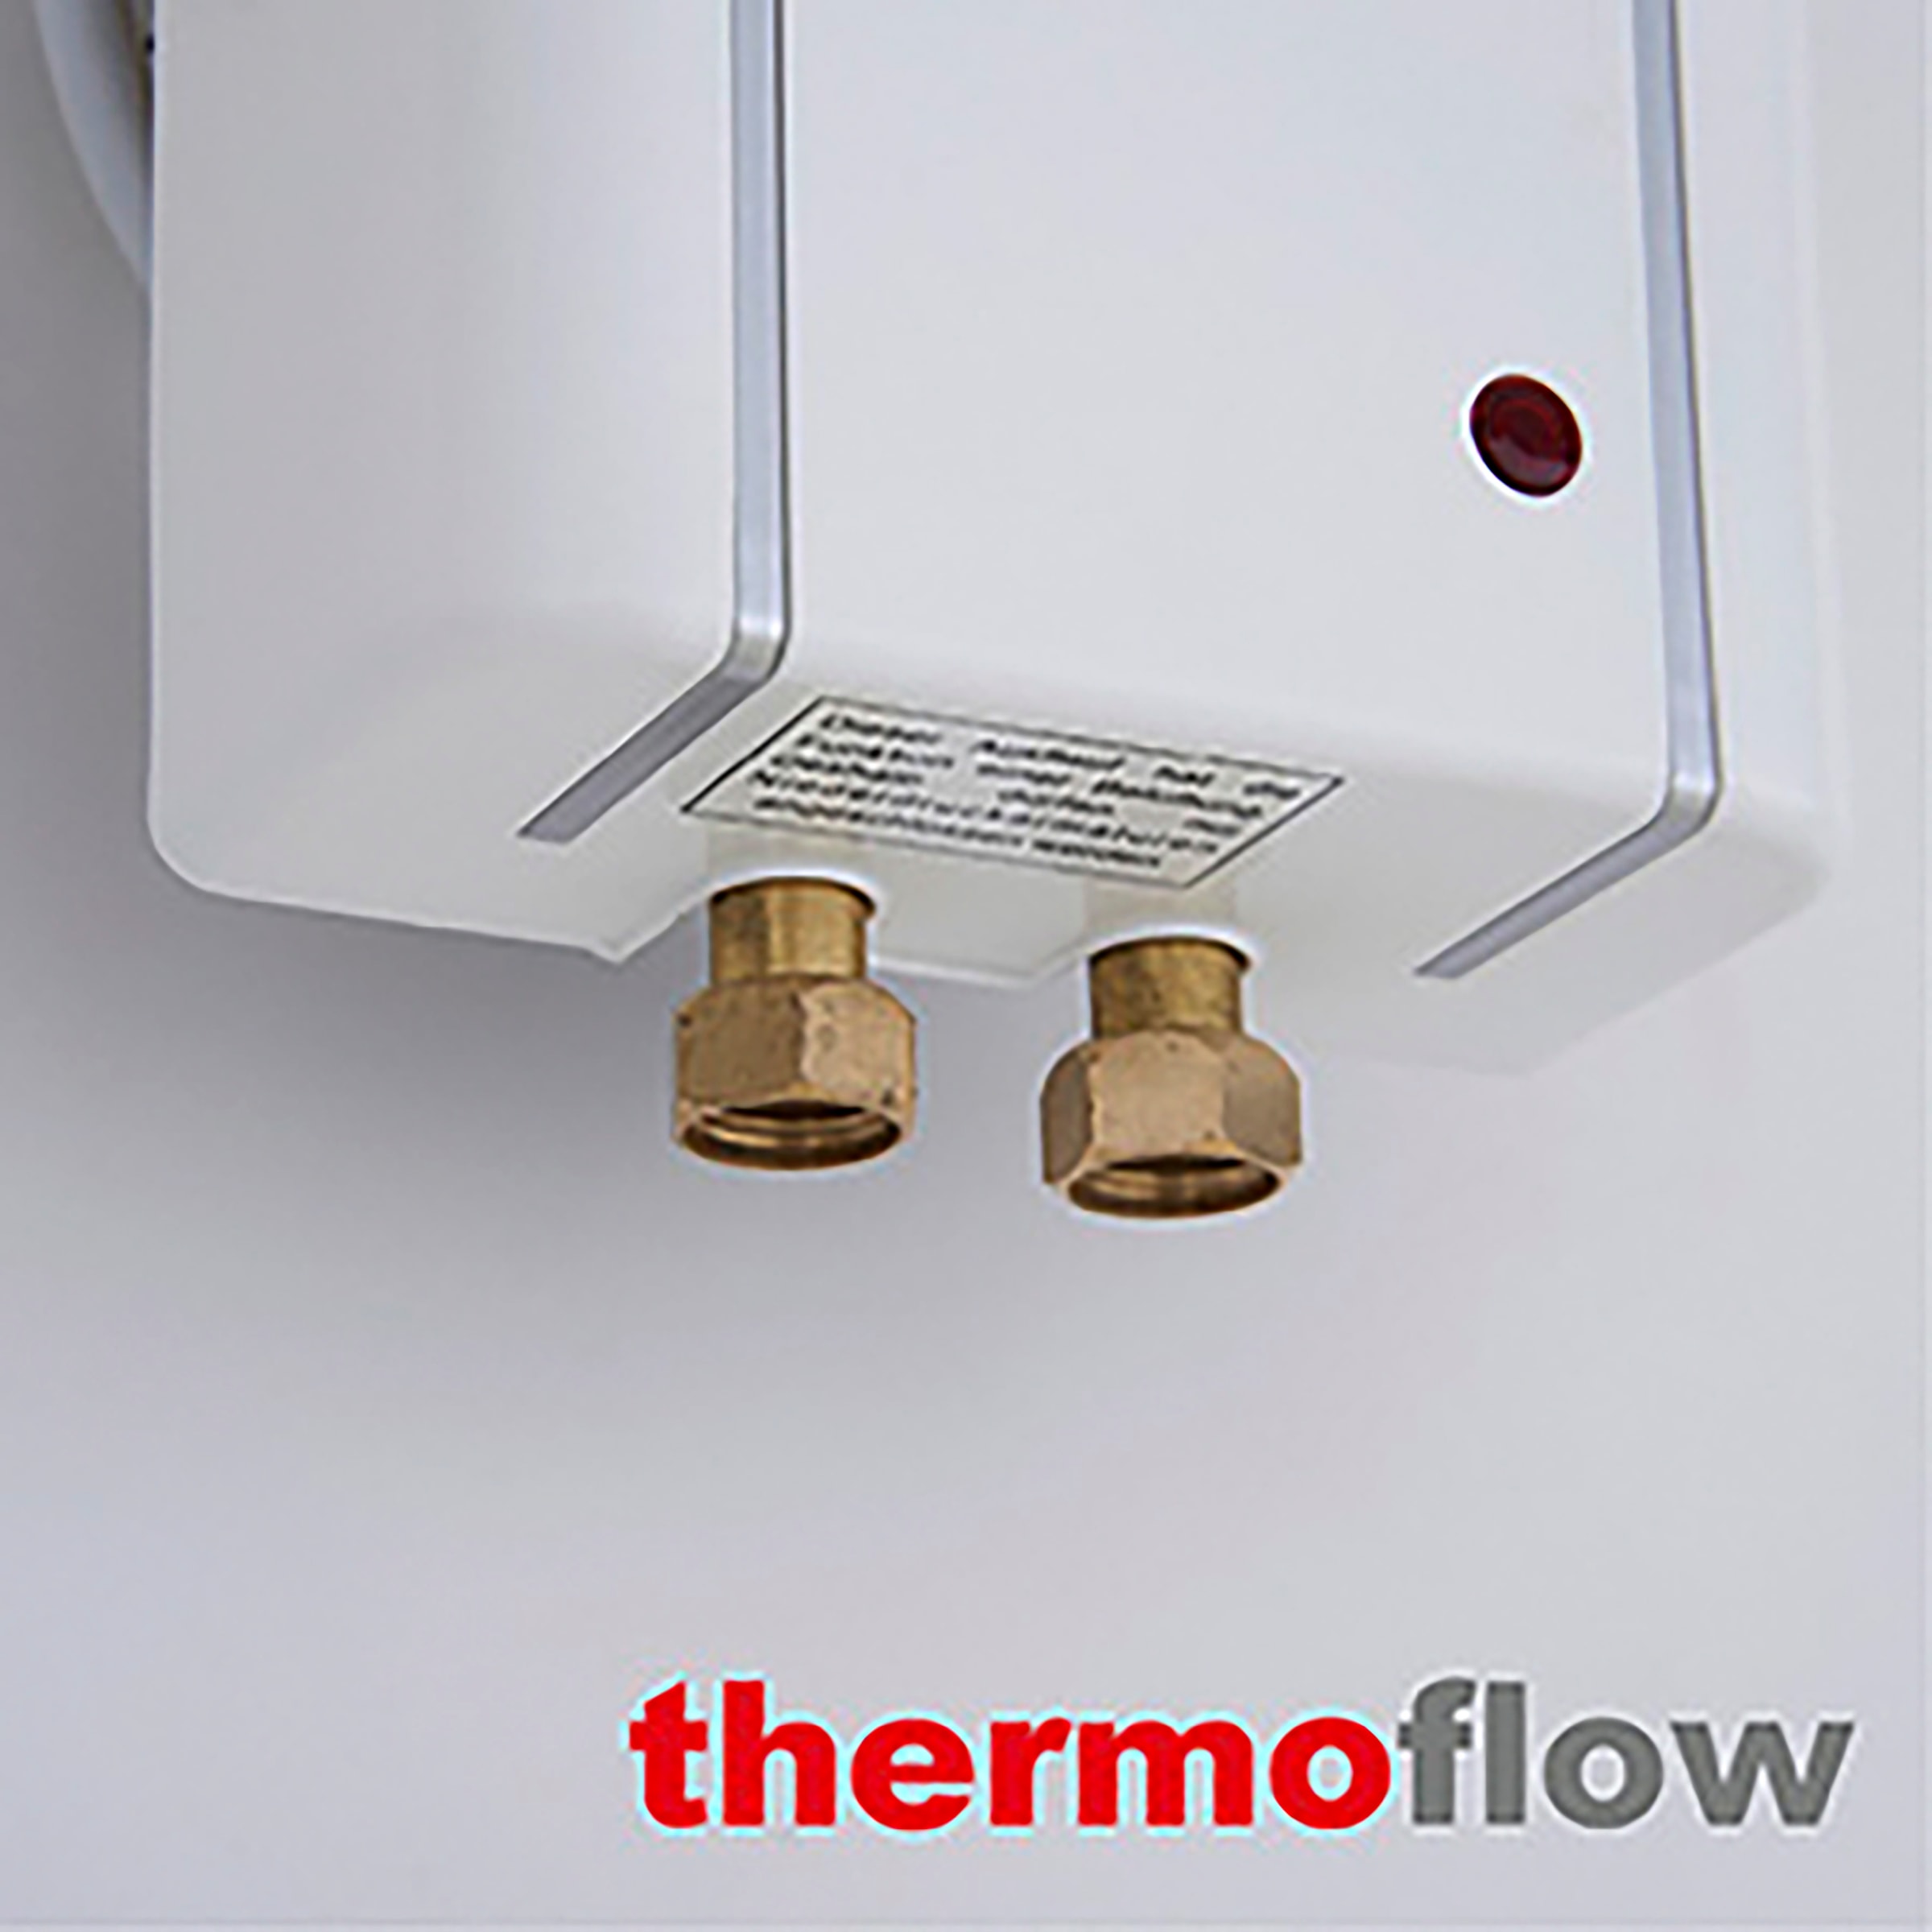 Thermoflow Klein-Durchlauferhitzer »Thermoflow Elex 3,5«